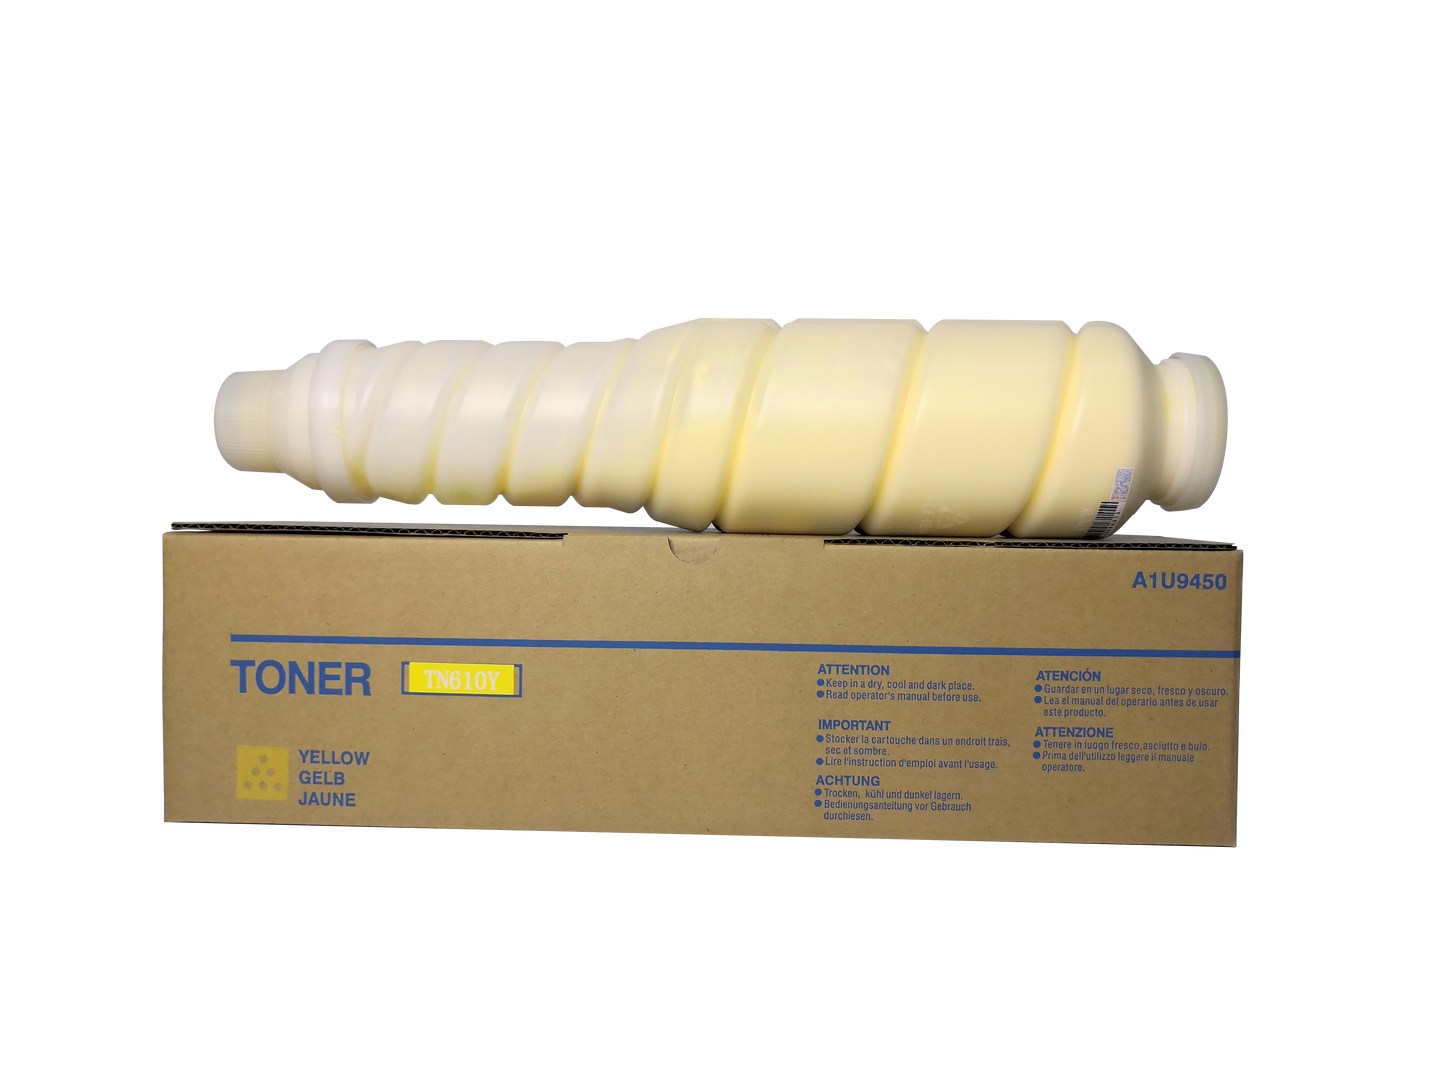 TN612 Toner Cartridge for Bizhub C6501 5501 cartridge non-OEM